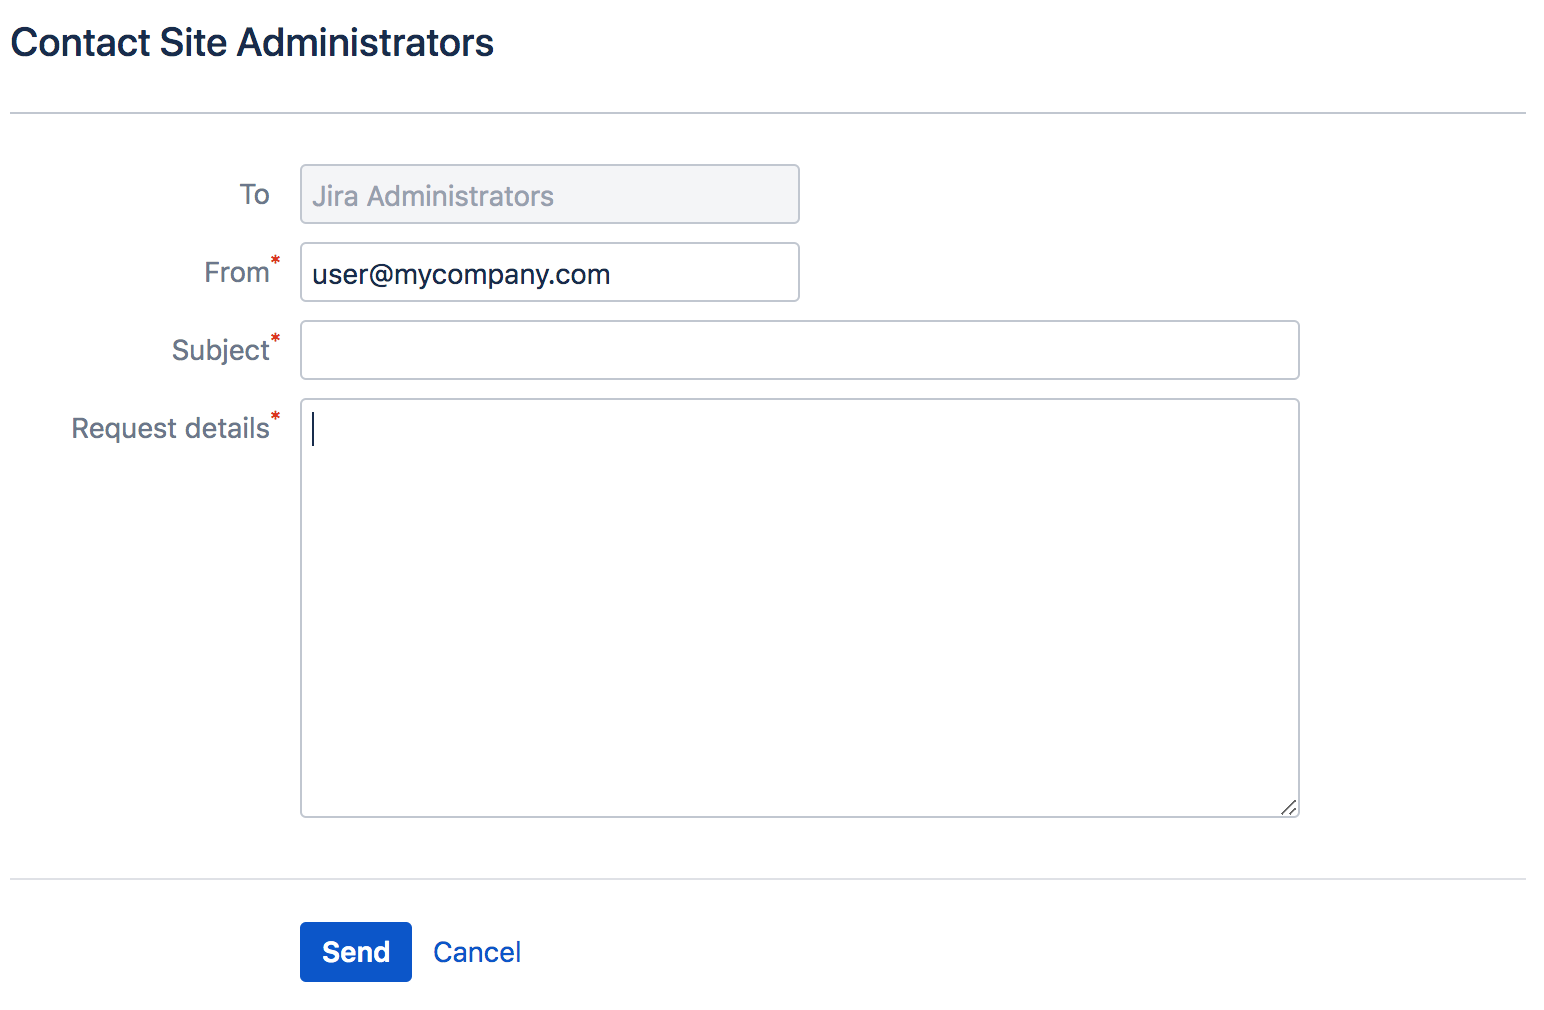 Contact Site Administrators form.